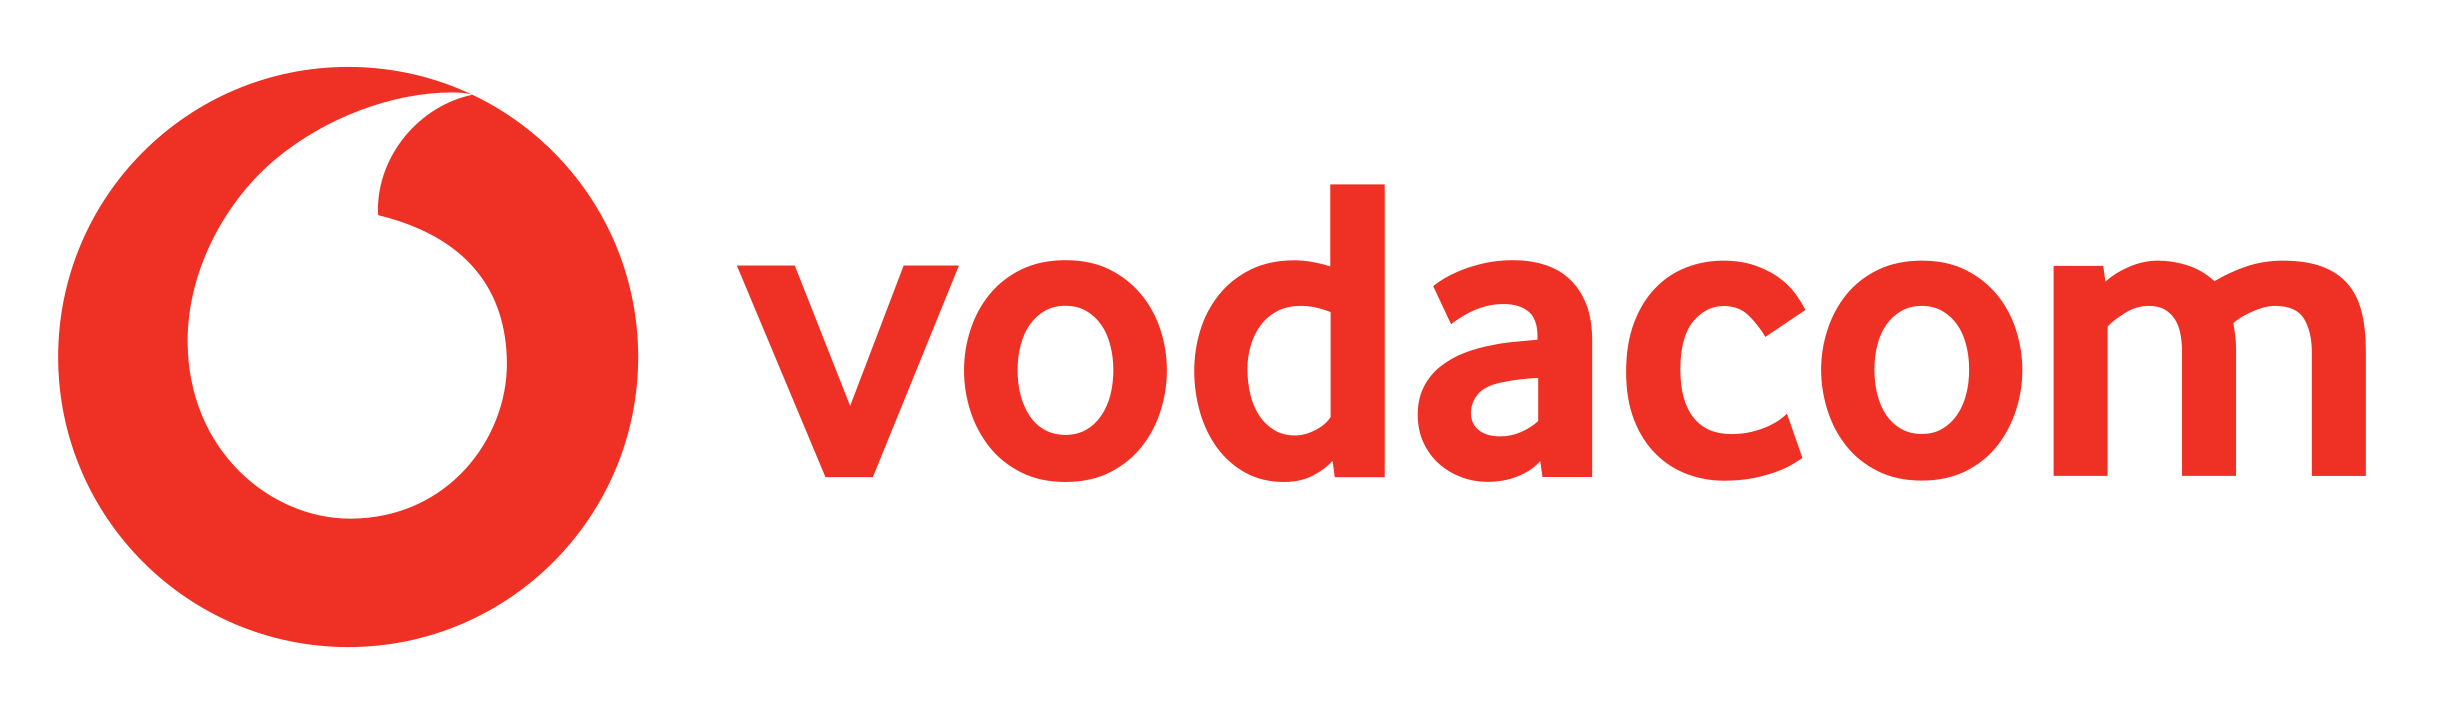 Vodacom-Logo-wine